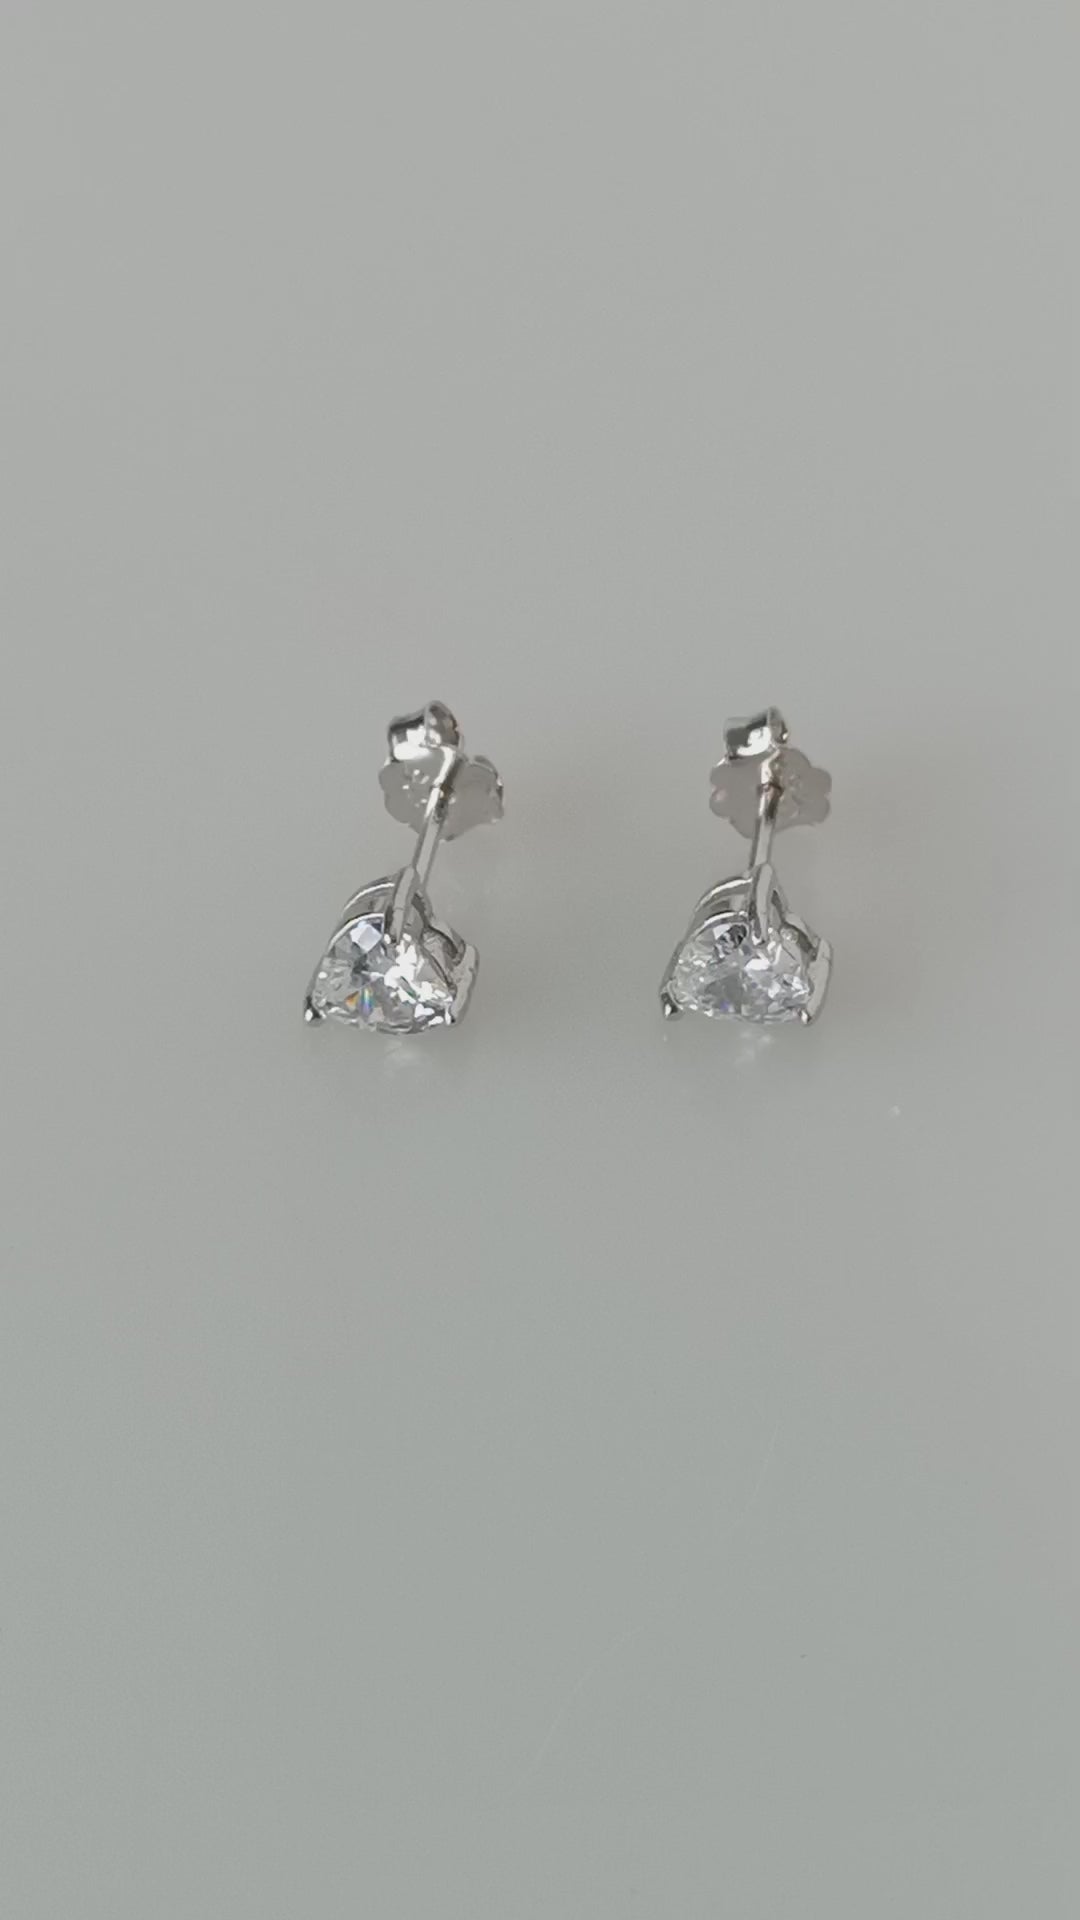 Art Deco inspired Onyx and Diamond earrings